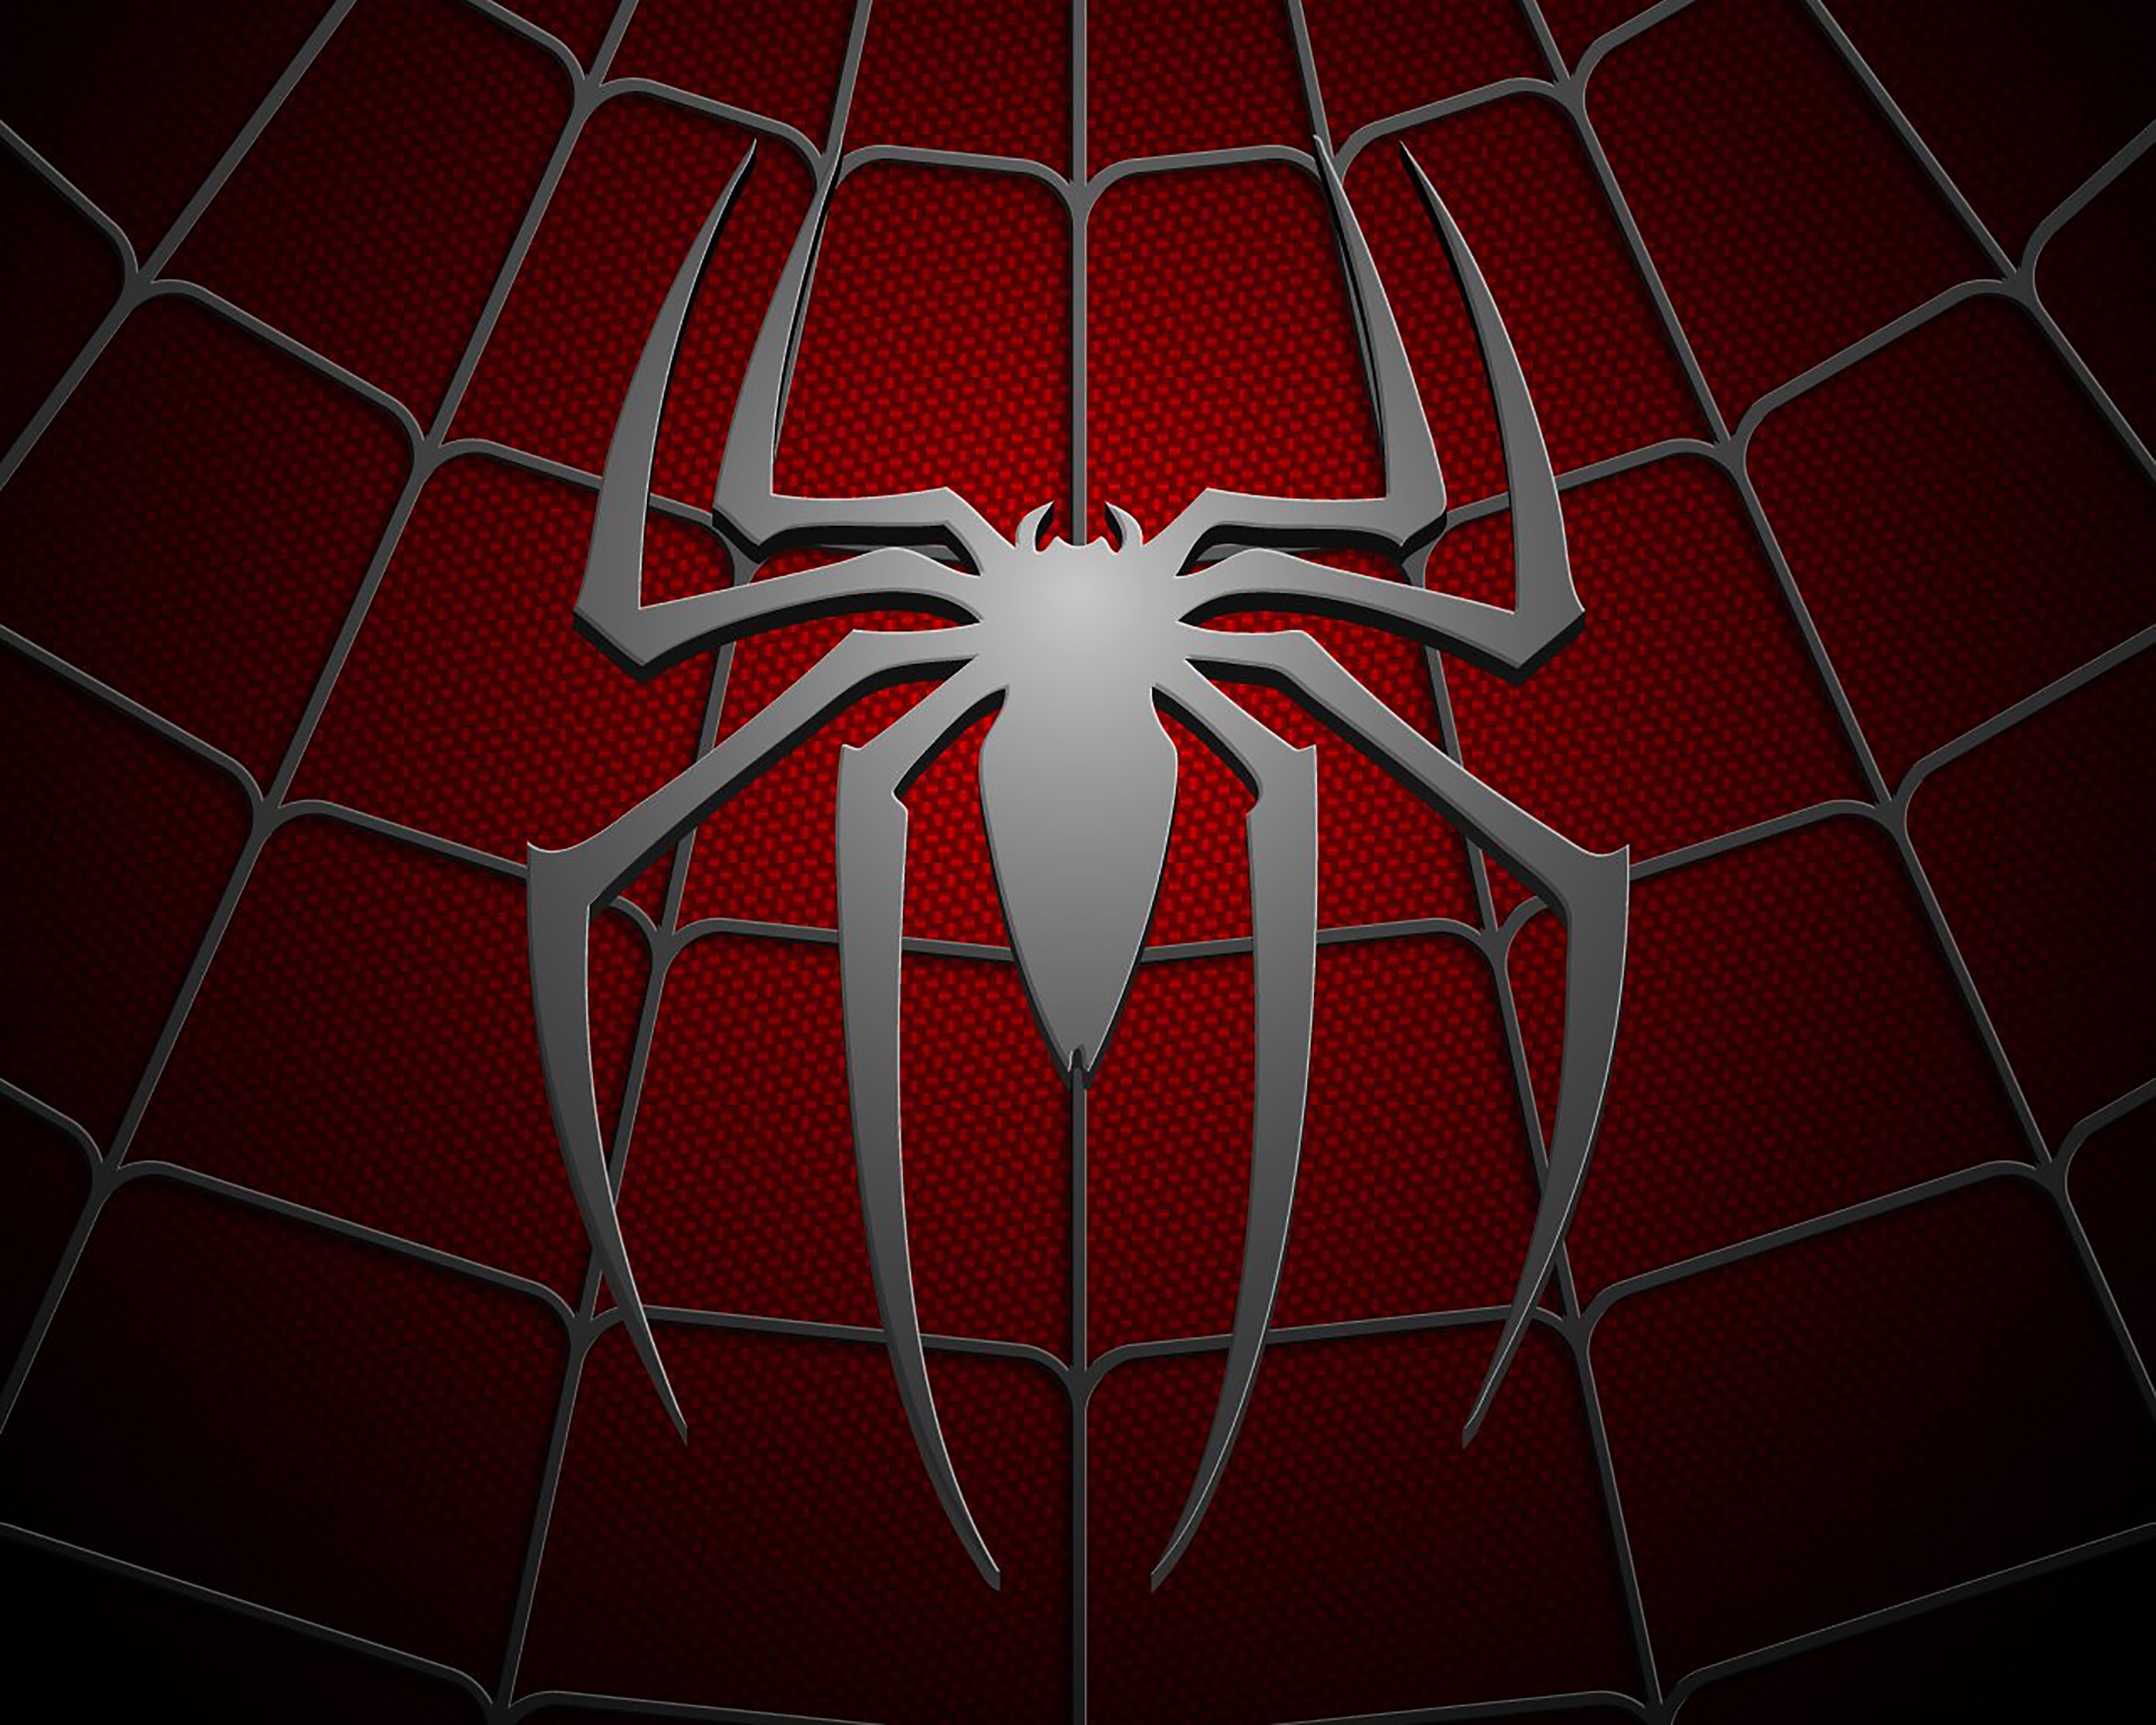 Heat Transfer Spiderman, Iron Patches Spiderman